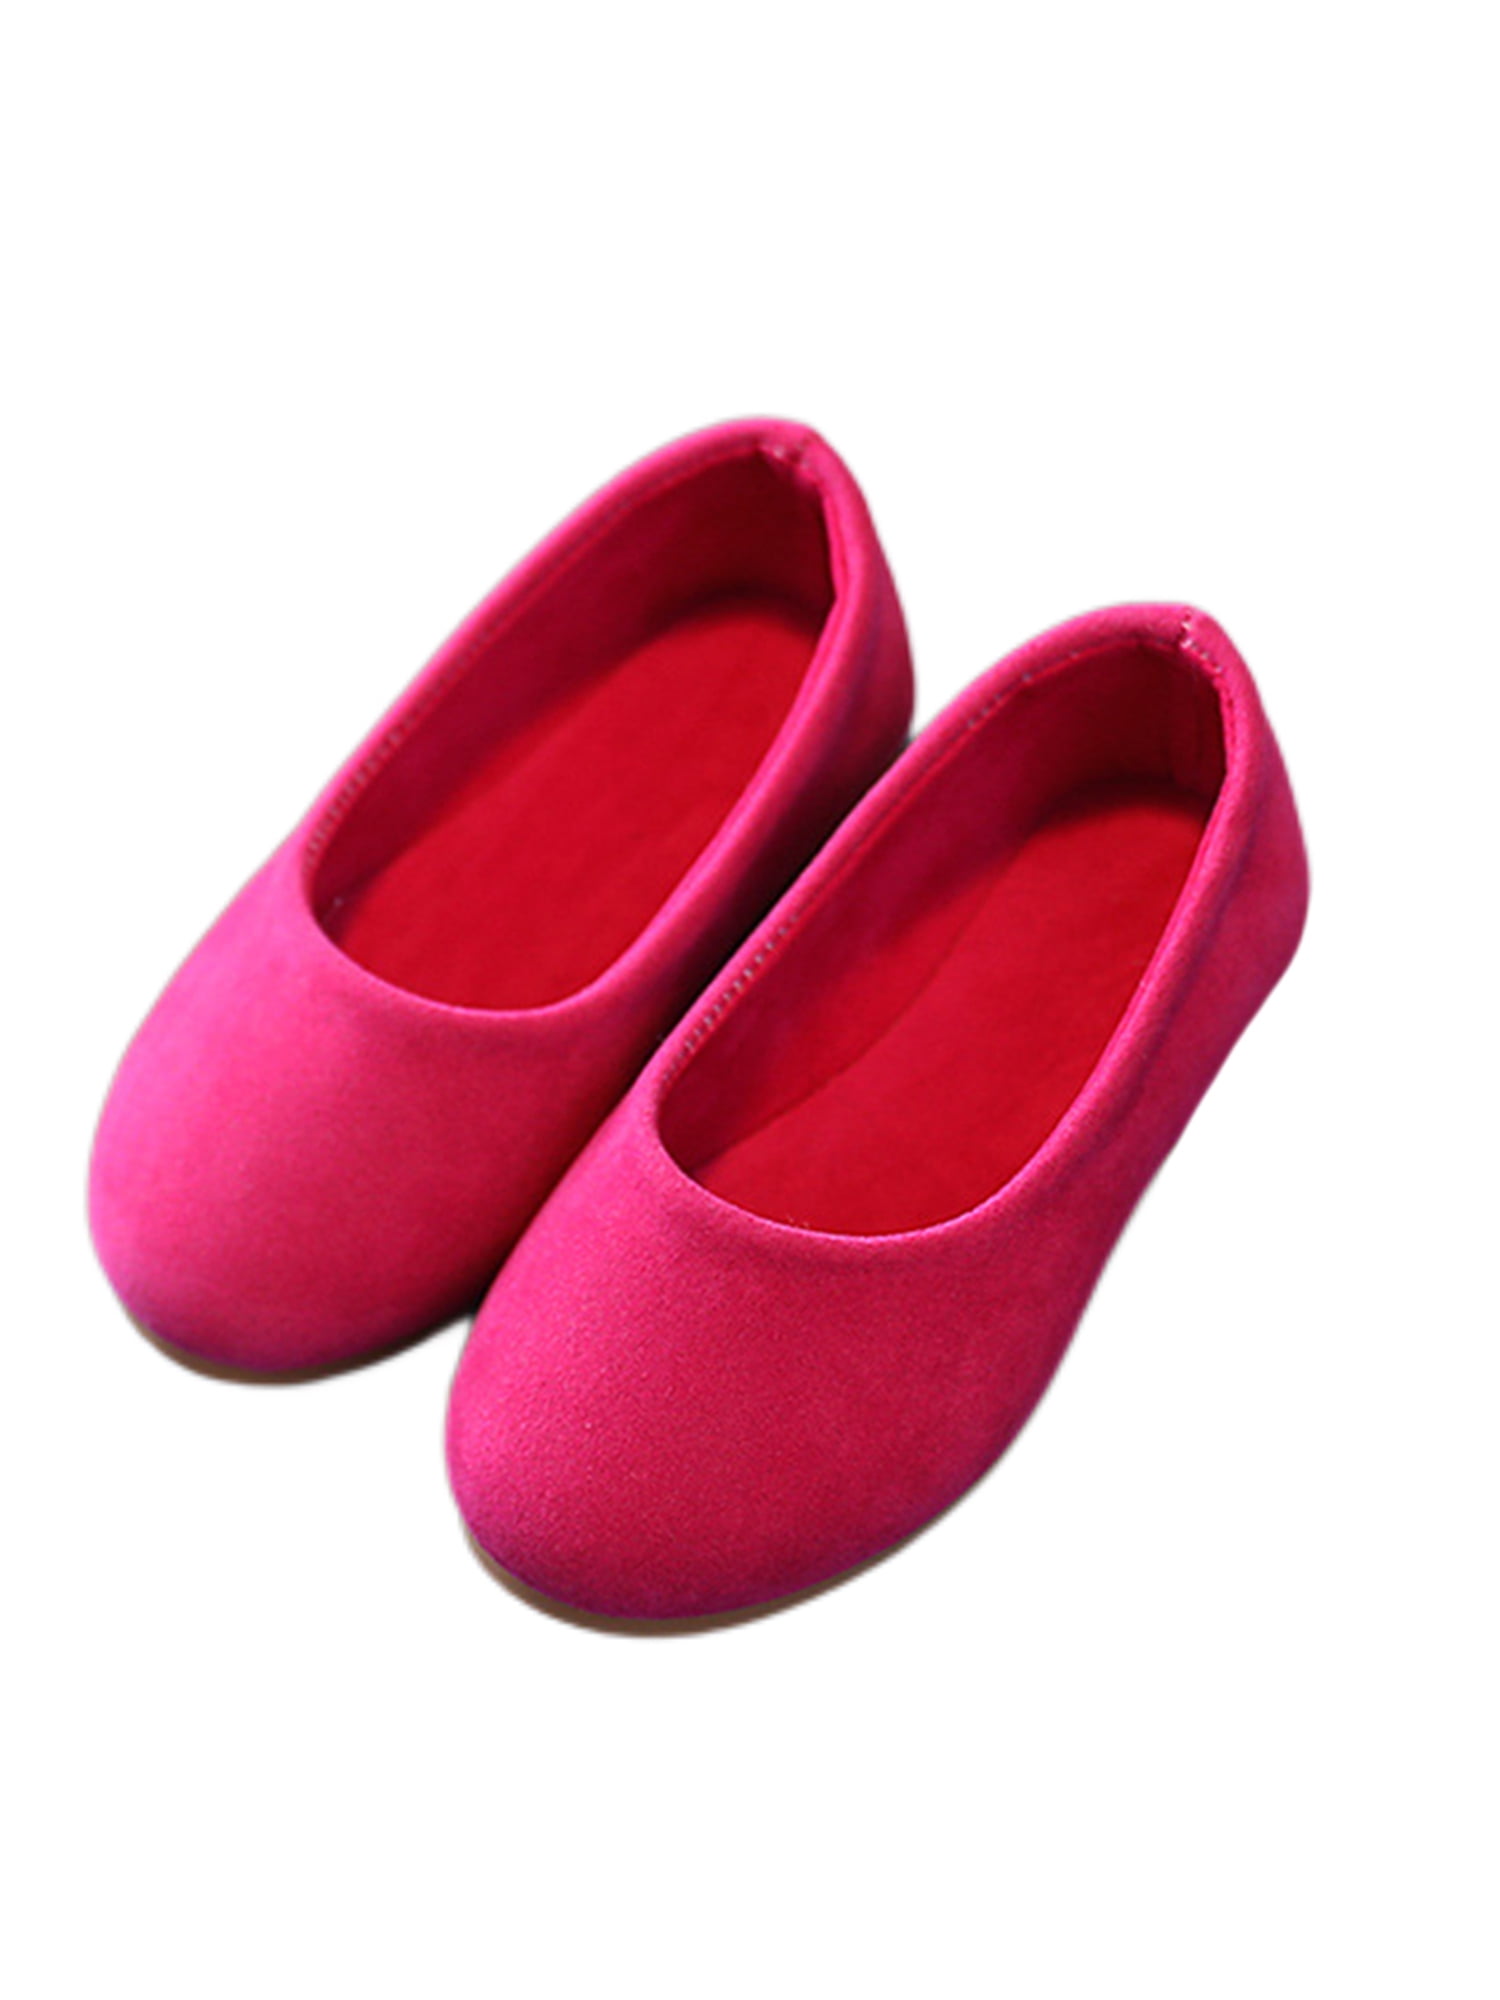 Girls Mary Jane Ballerina Flats Dress Shoes (Toddler/Little Kid/Big Kid) Rose Red - Walmart.com